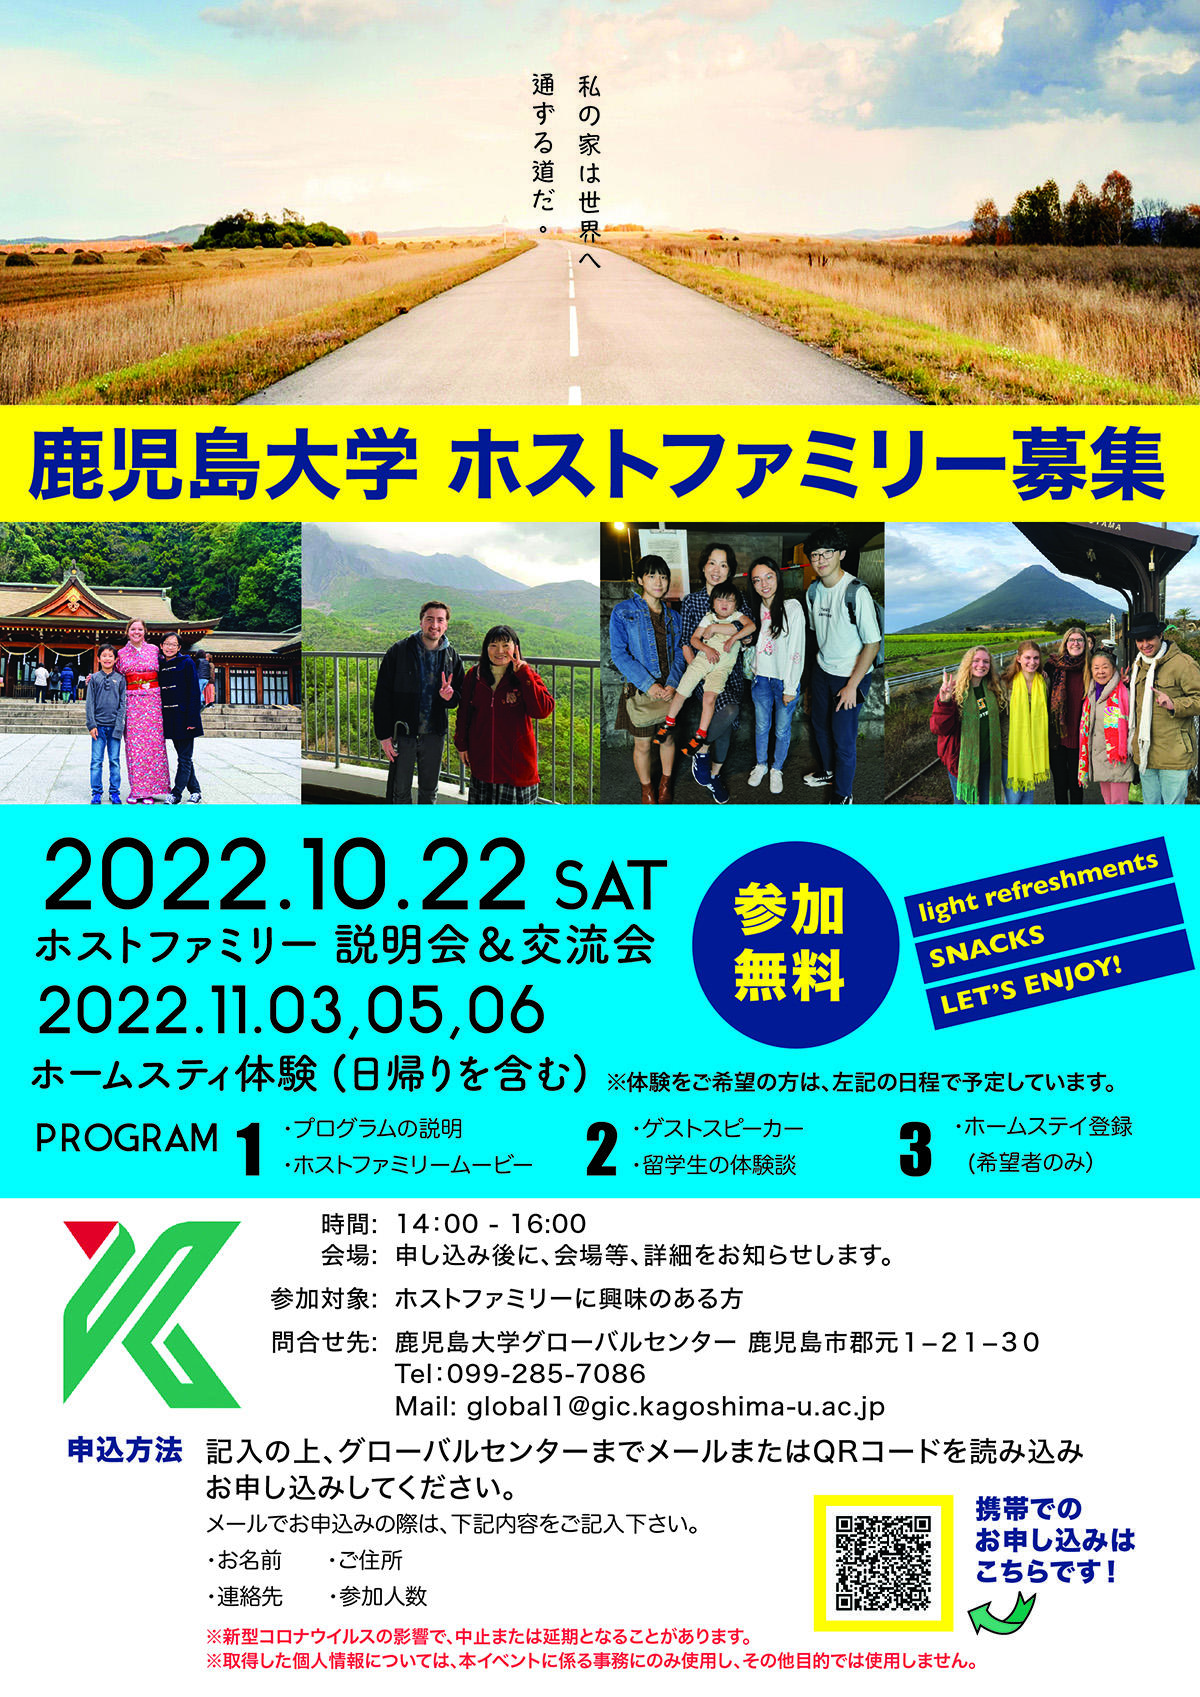 https://www.kagoshima-u.ac.jp/information/20221003host01.jpg